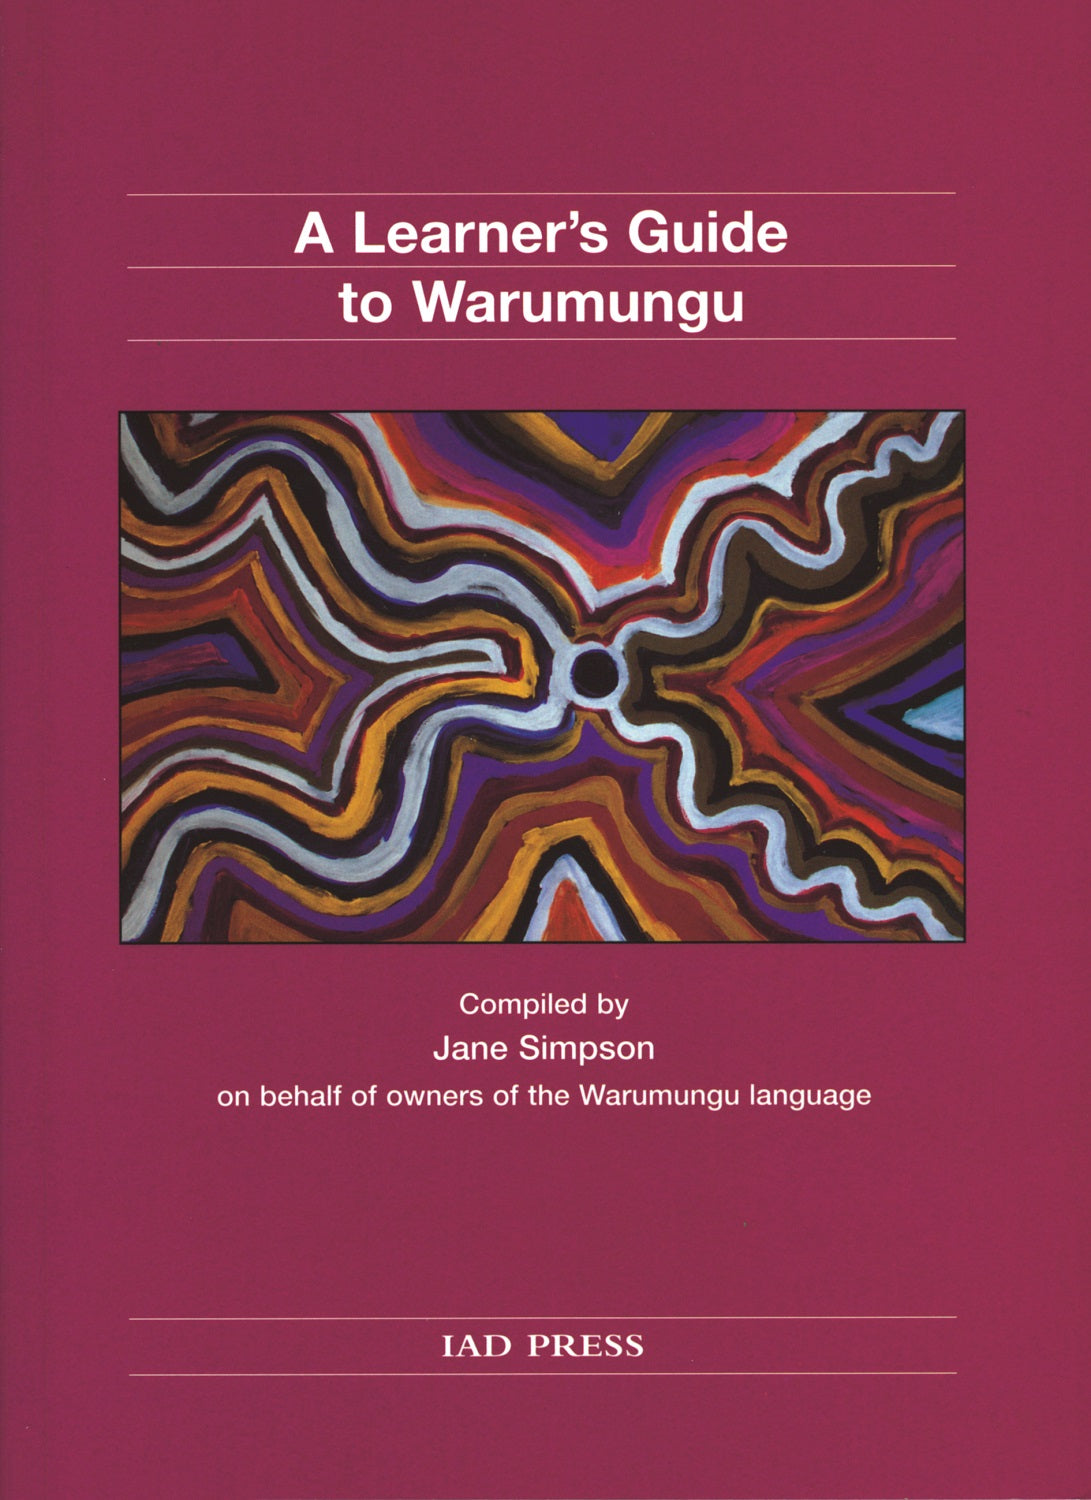 A Learner's Guide to Warumungu | IAD Press | Australian Aboriginal Publisher & Book Shop